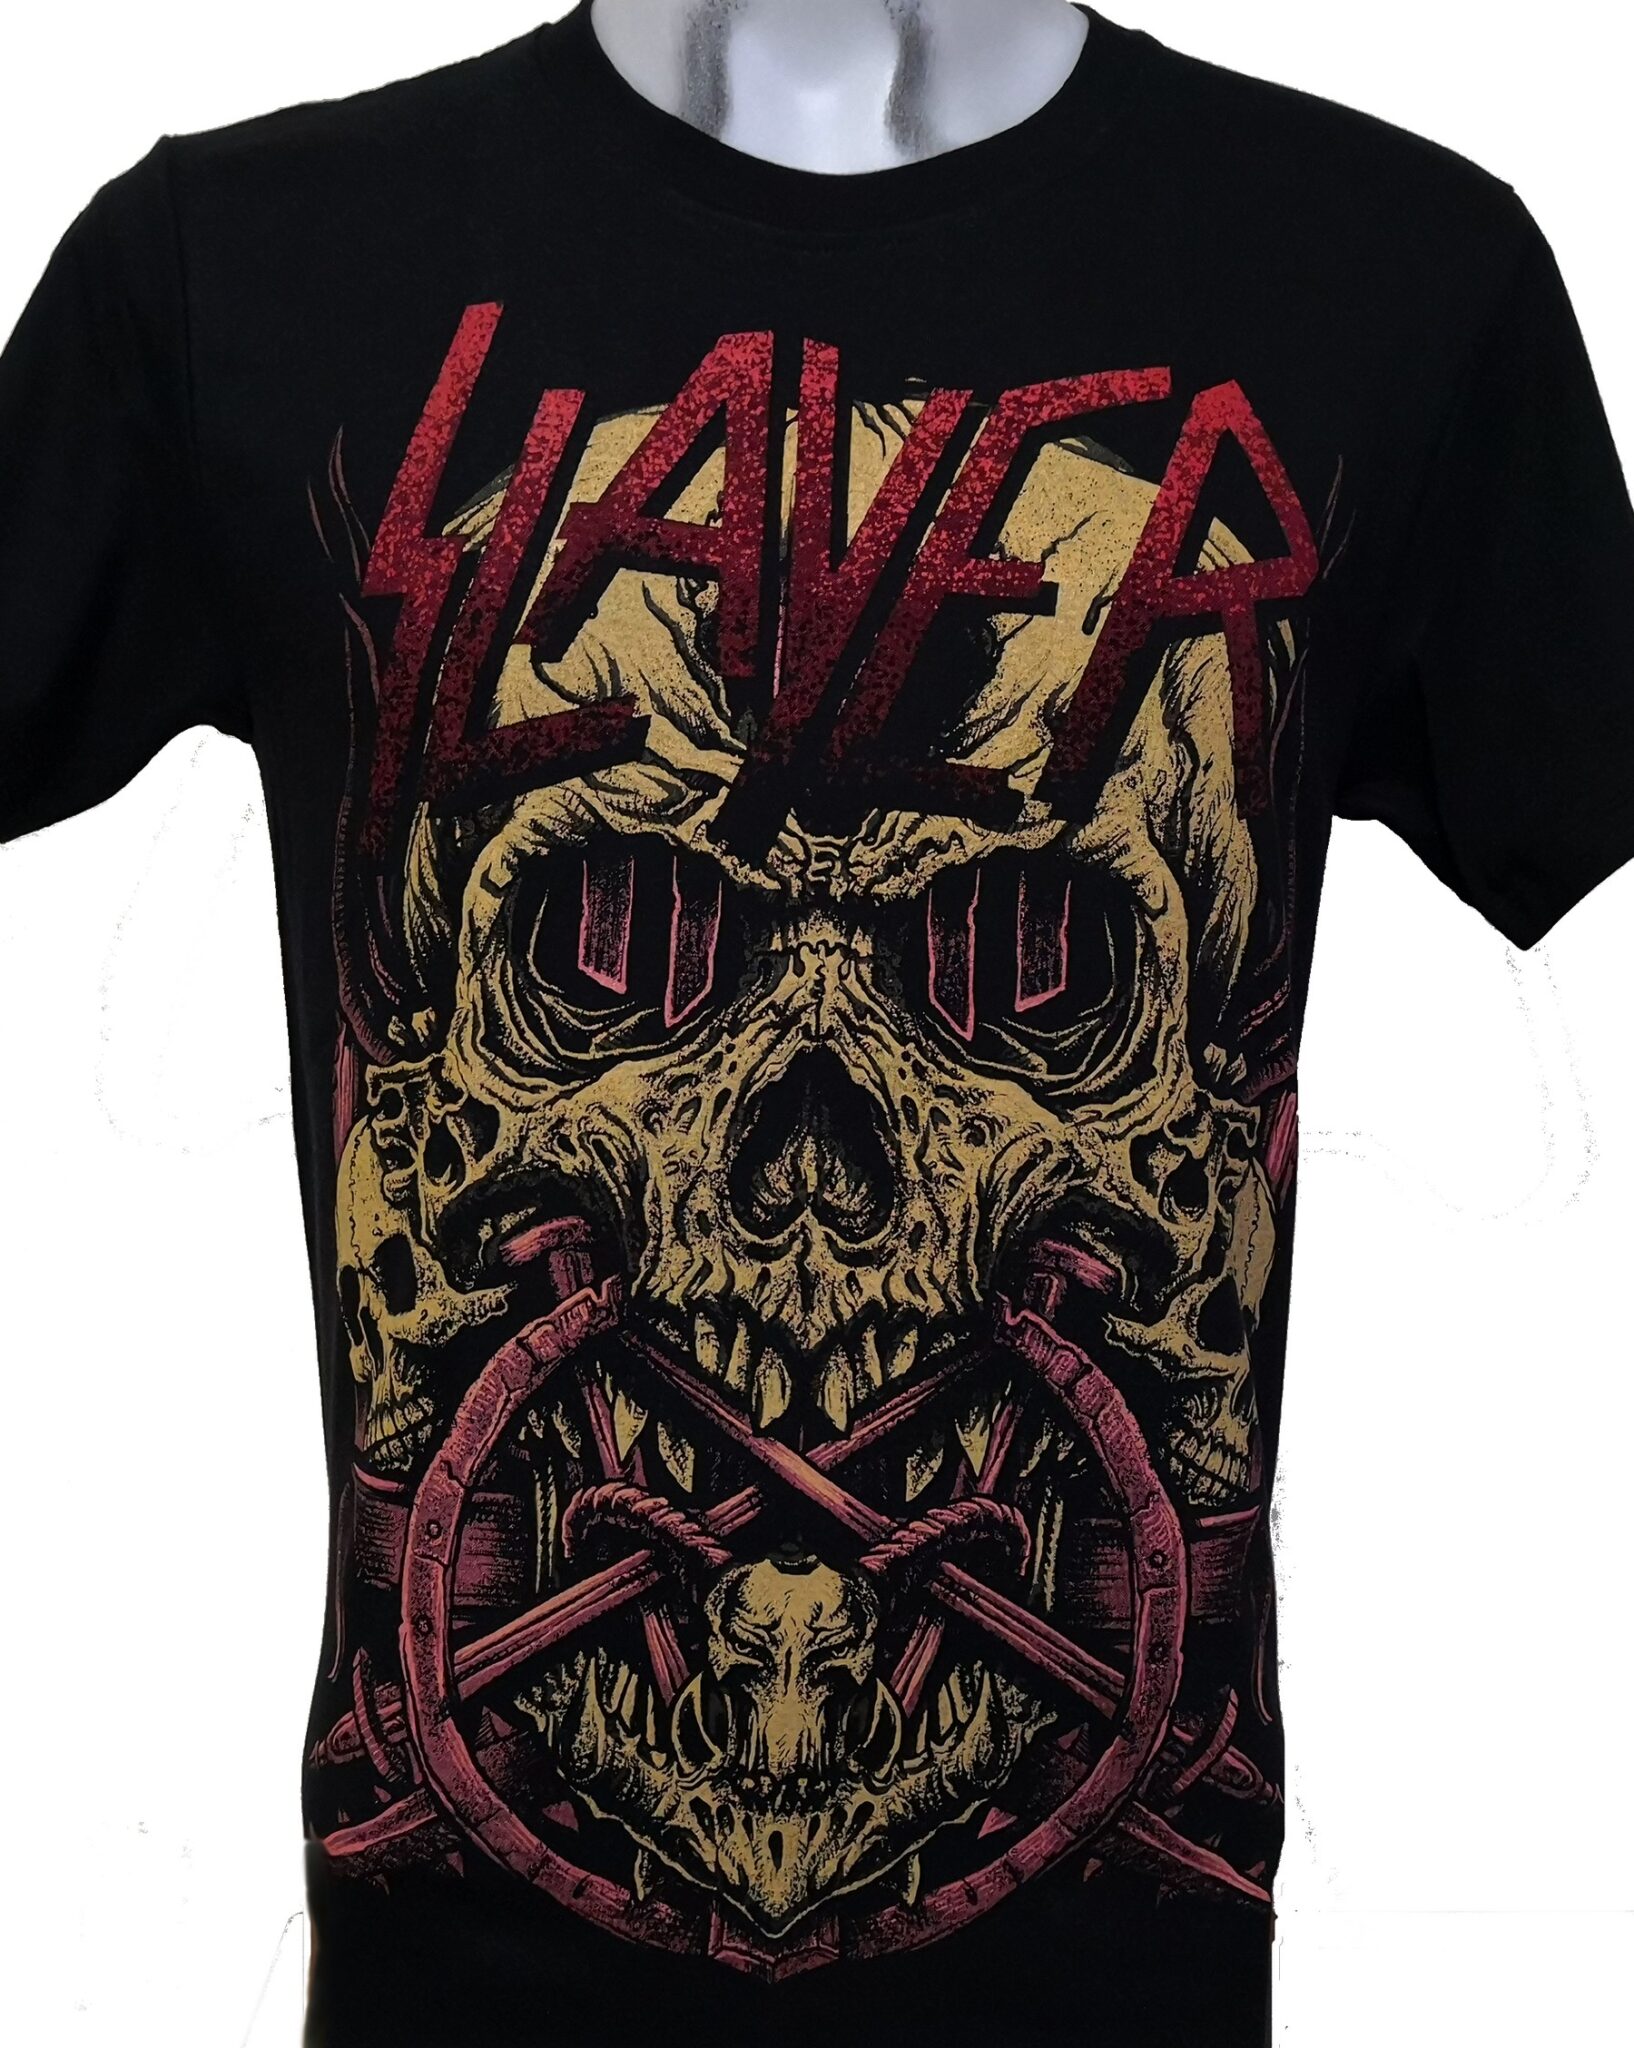 Slayer tshirt size L RoxxBKK